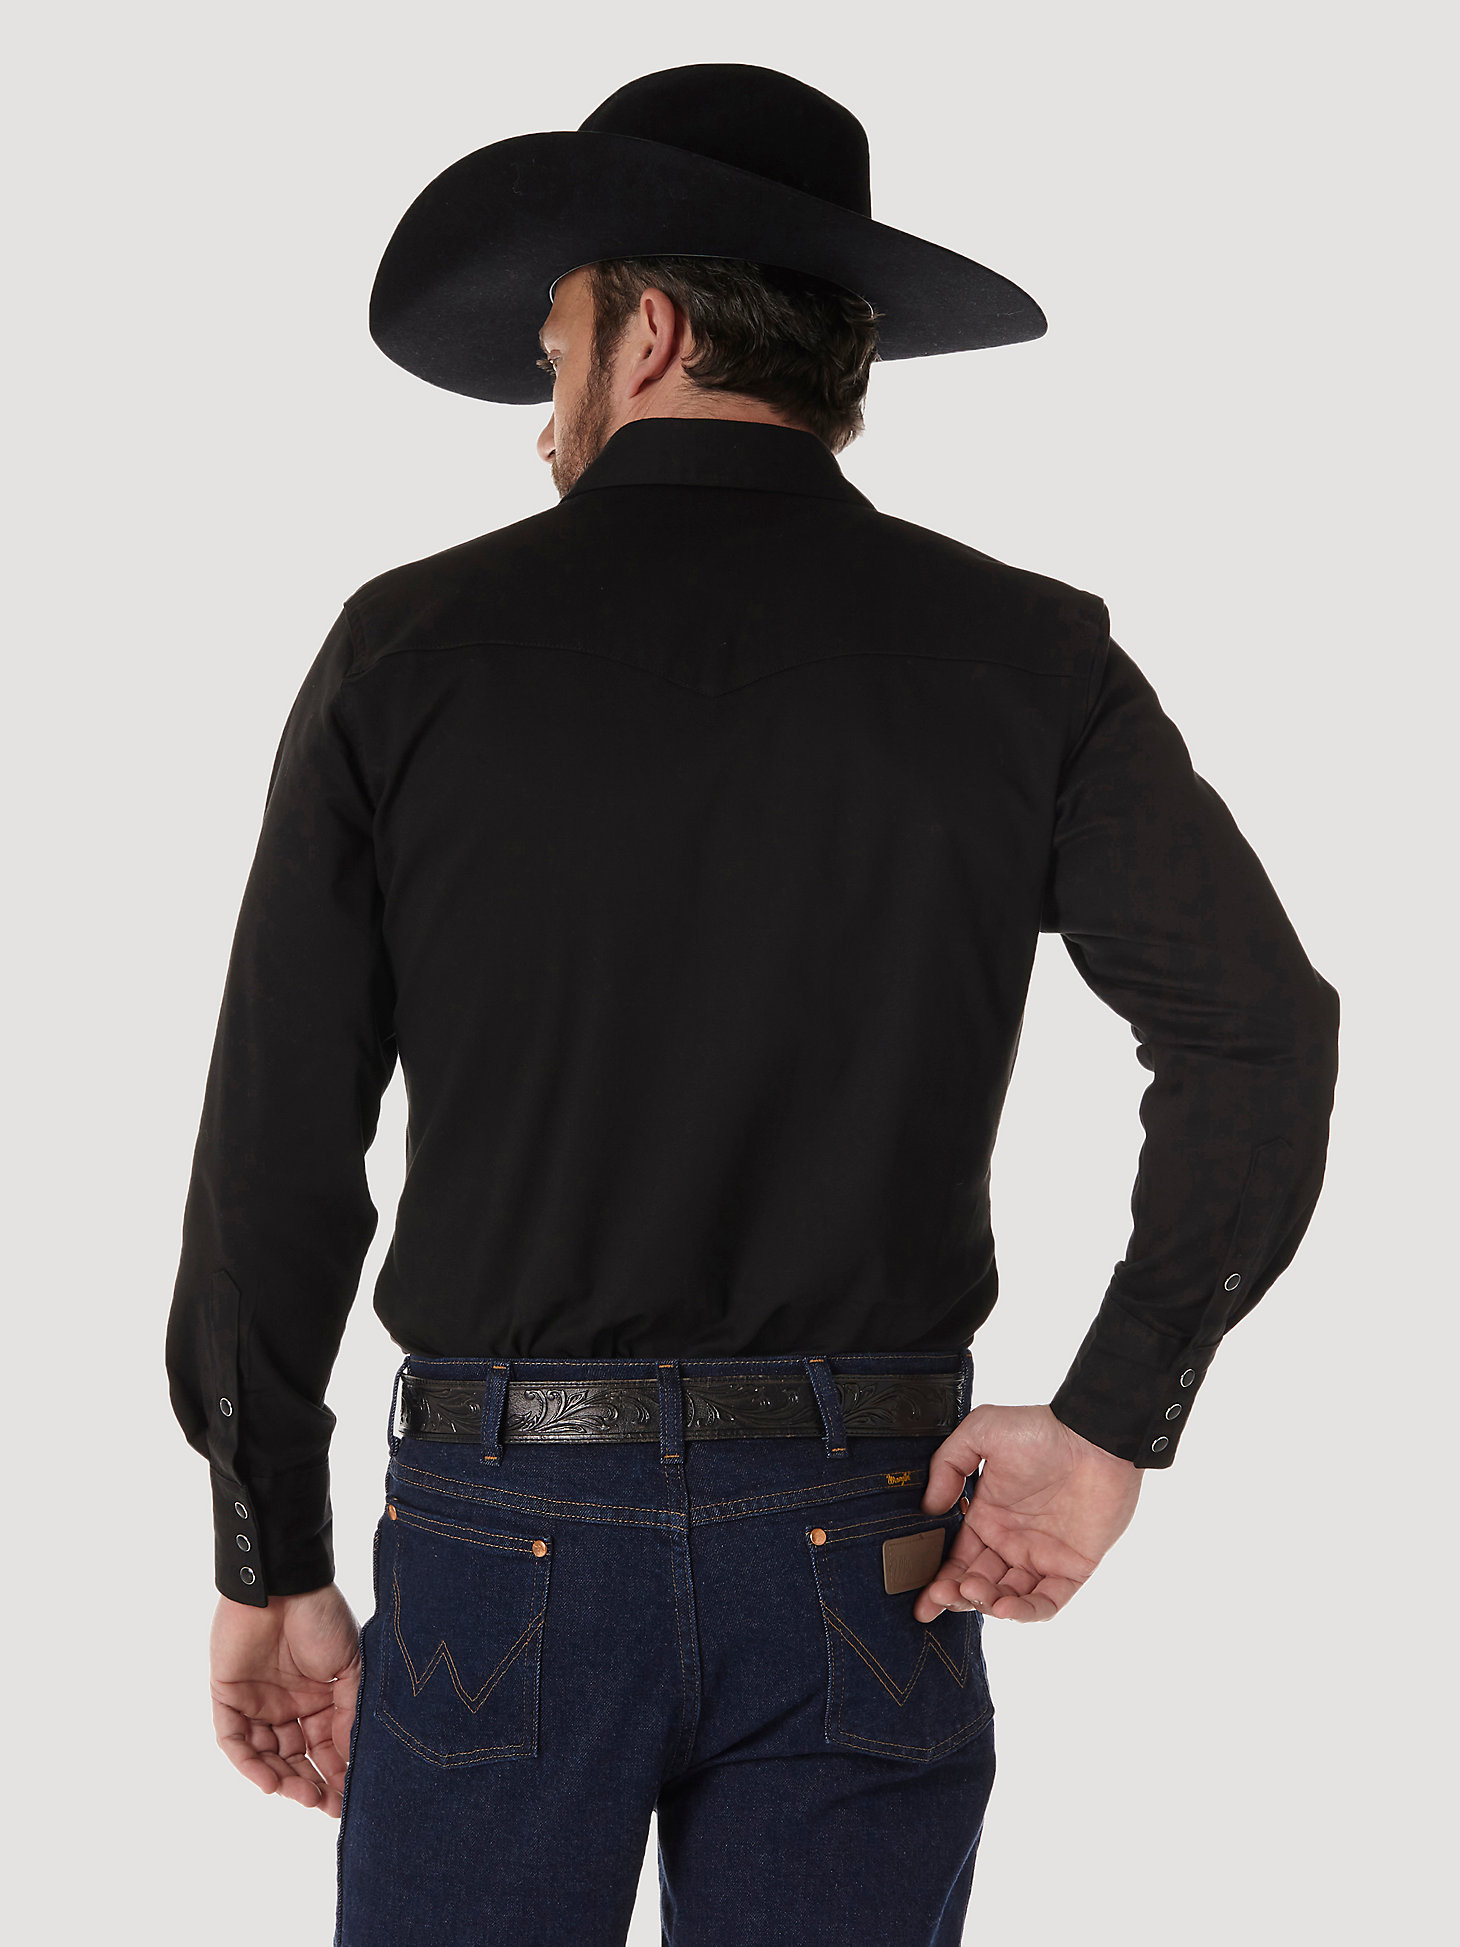 Premium Performance Advanced Comfort Cowboy Cut® Long Sleeve Spread Collar Solid Shirt in Black alternative view 1